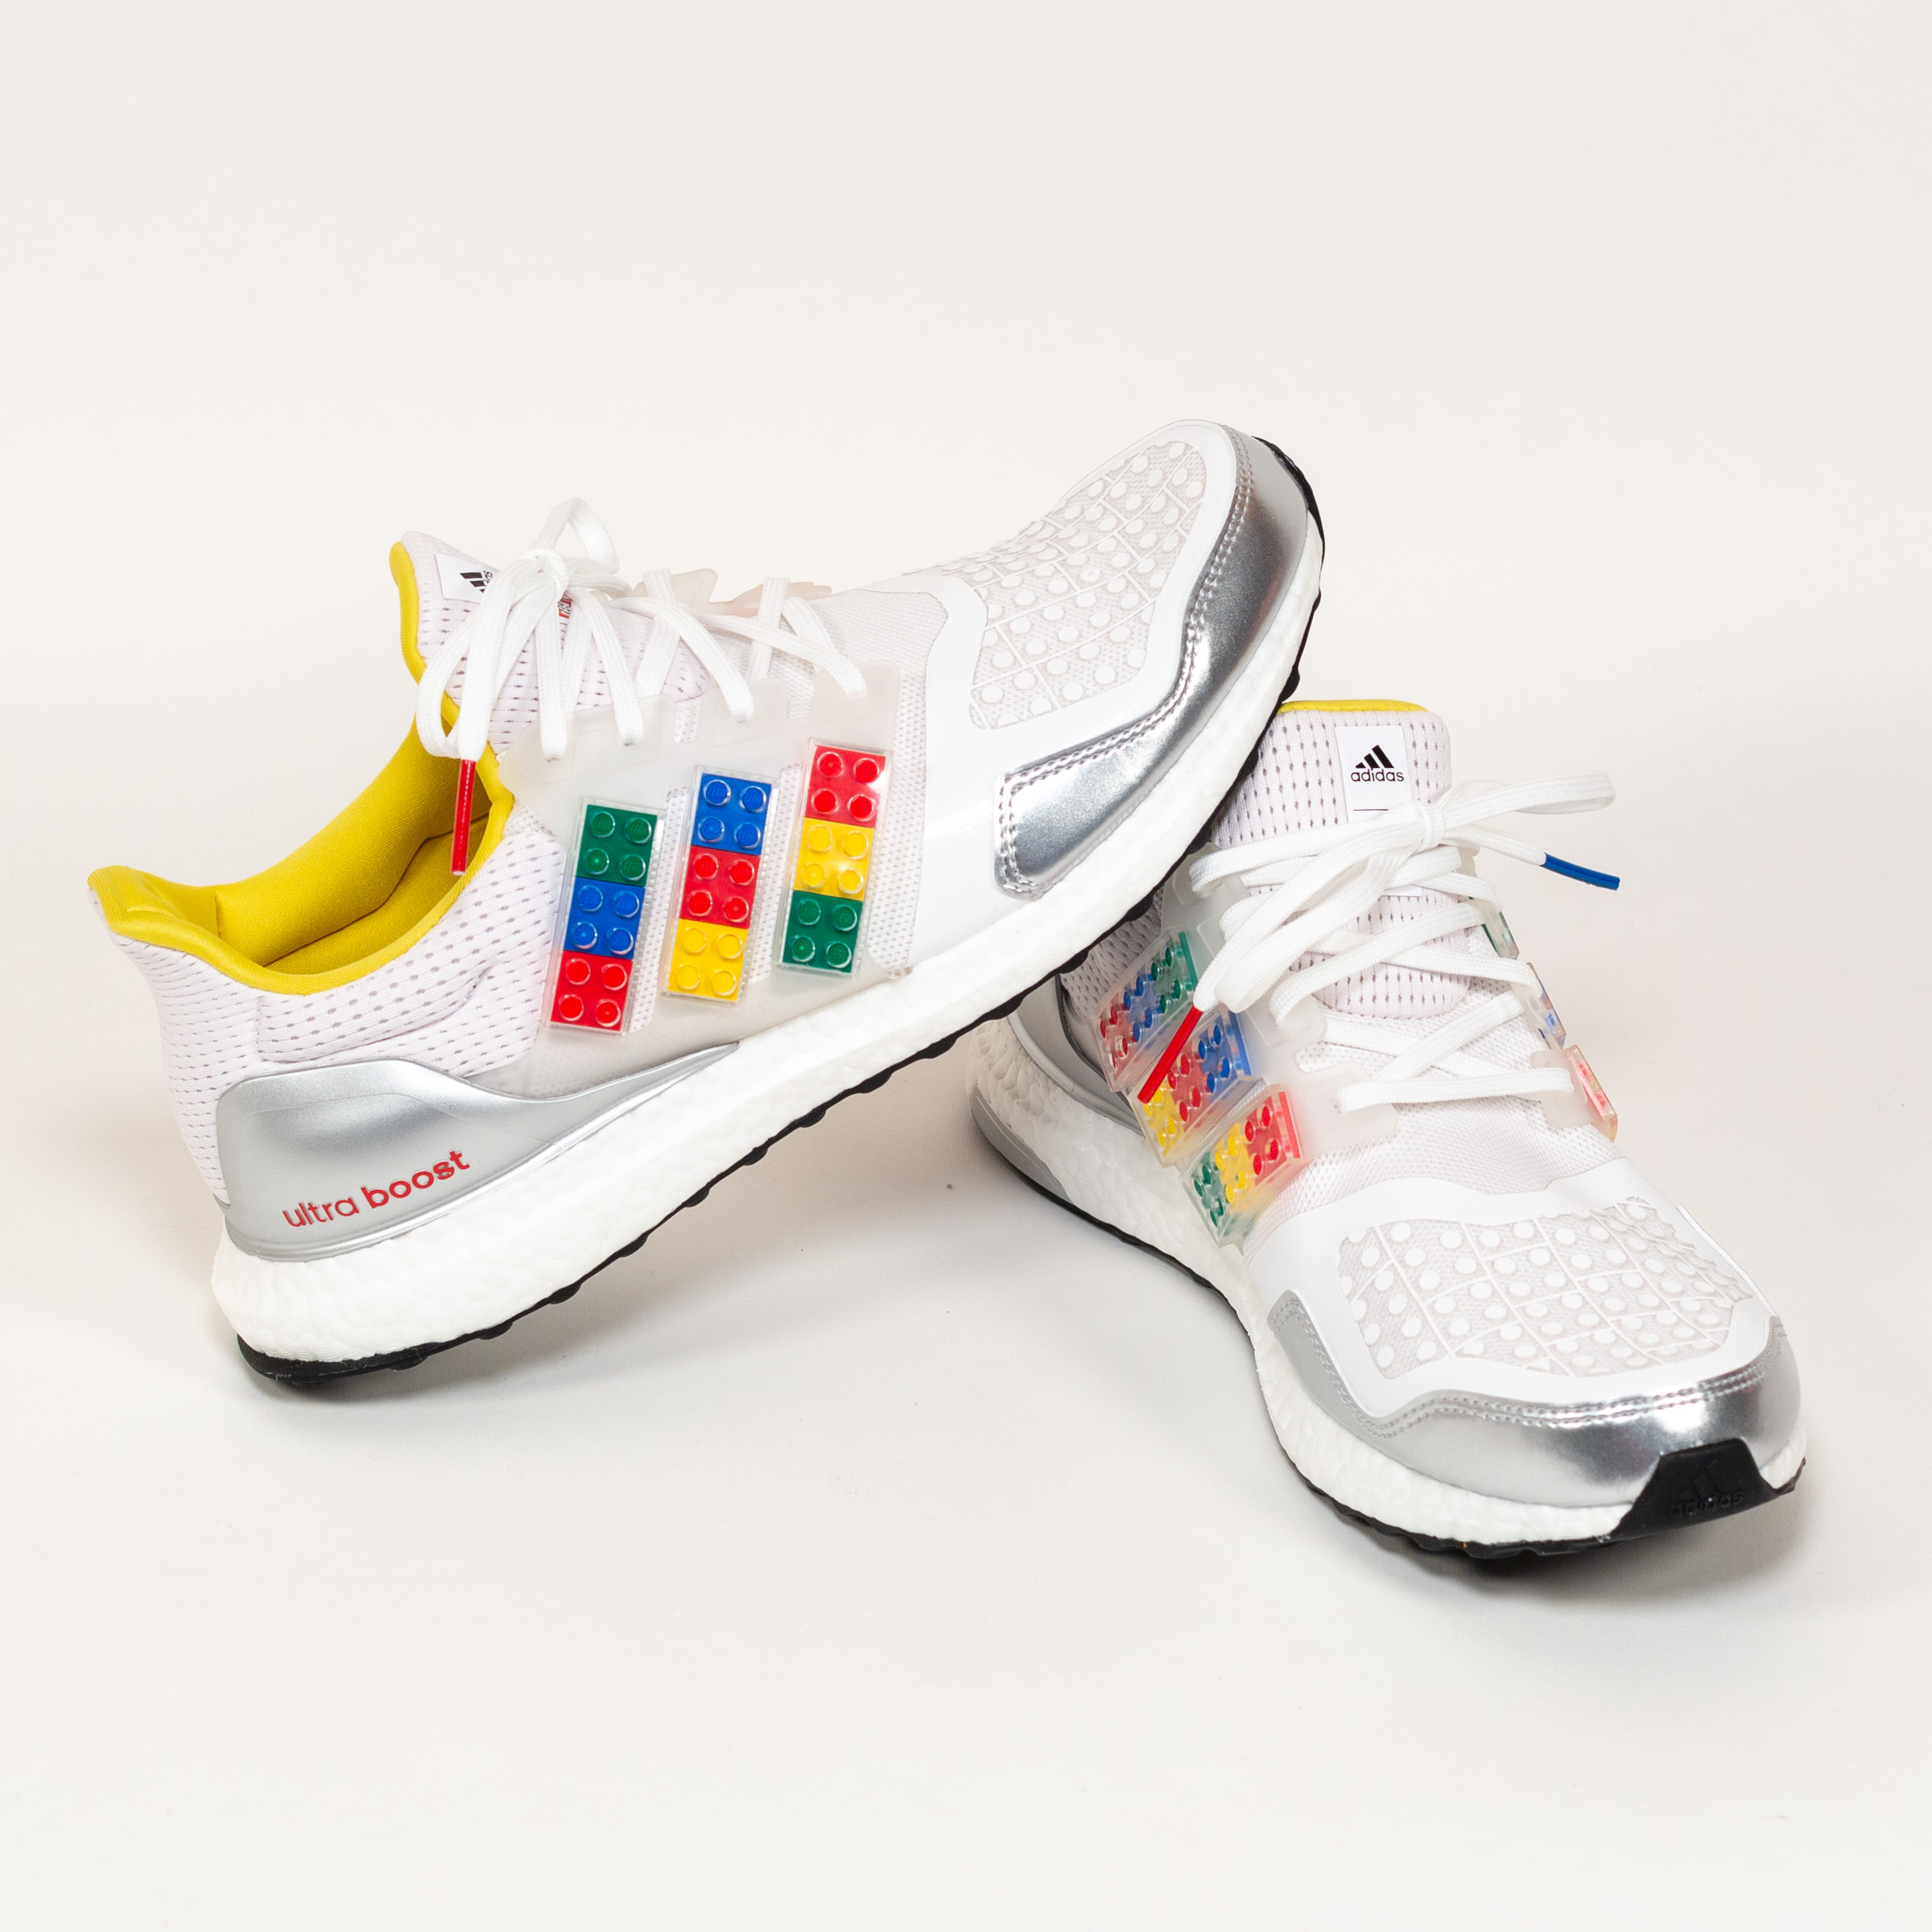 Shop Adidas x LEGO's Customizable Ultraboost DNA Sneakers